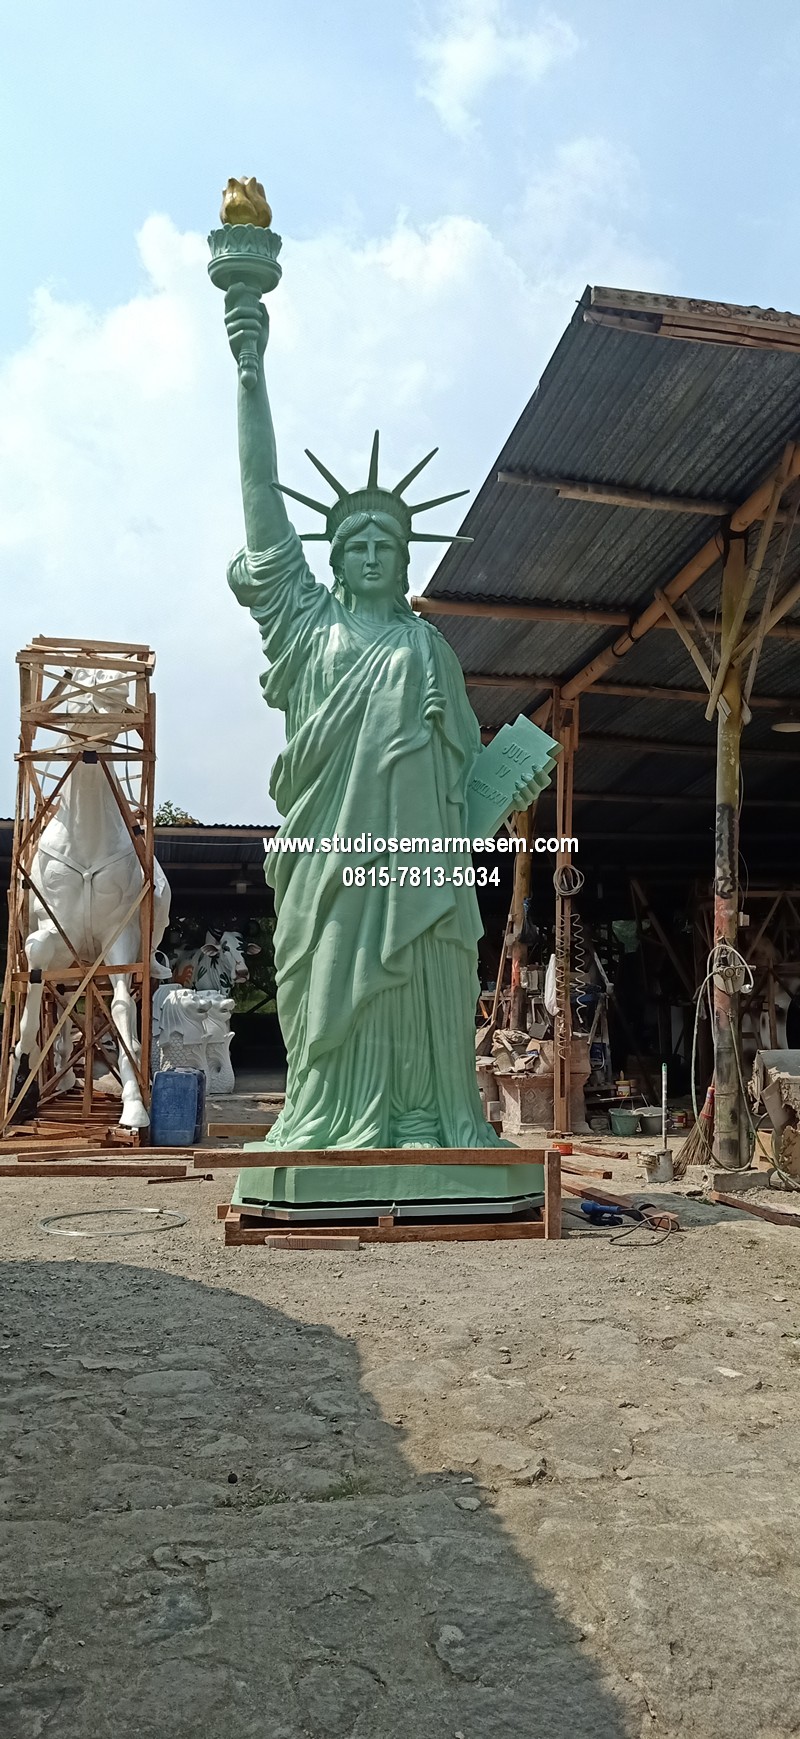 Jual Patung Liberty Ukuran Besar